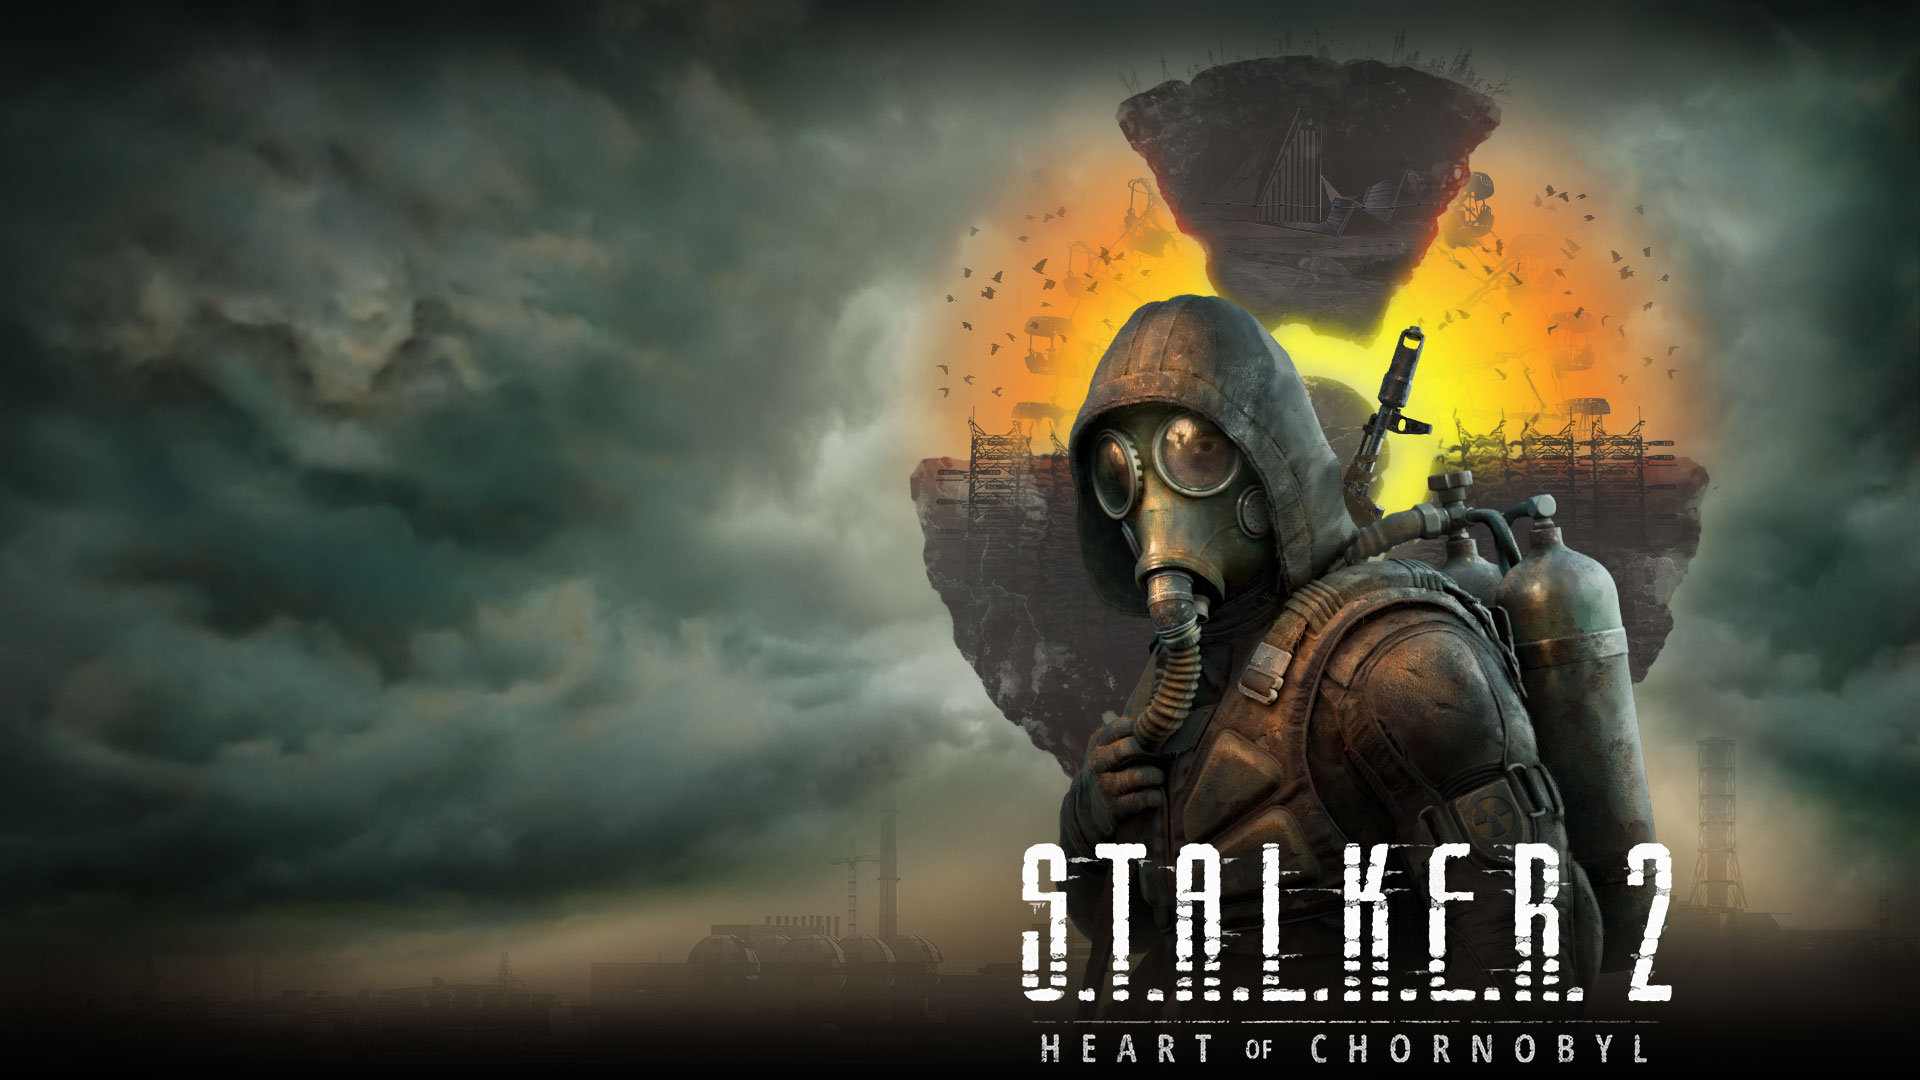 《Stalker 2: Heart of Chornobyl》，角色站在漂浮的景觀之前，空氣中瀰漫著雲霧及煙霾。